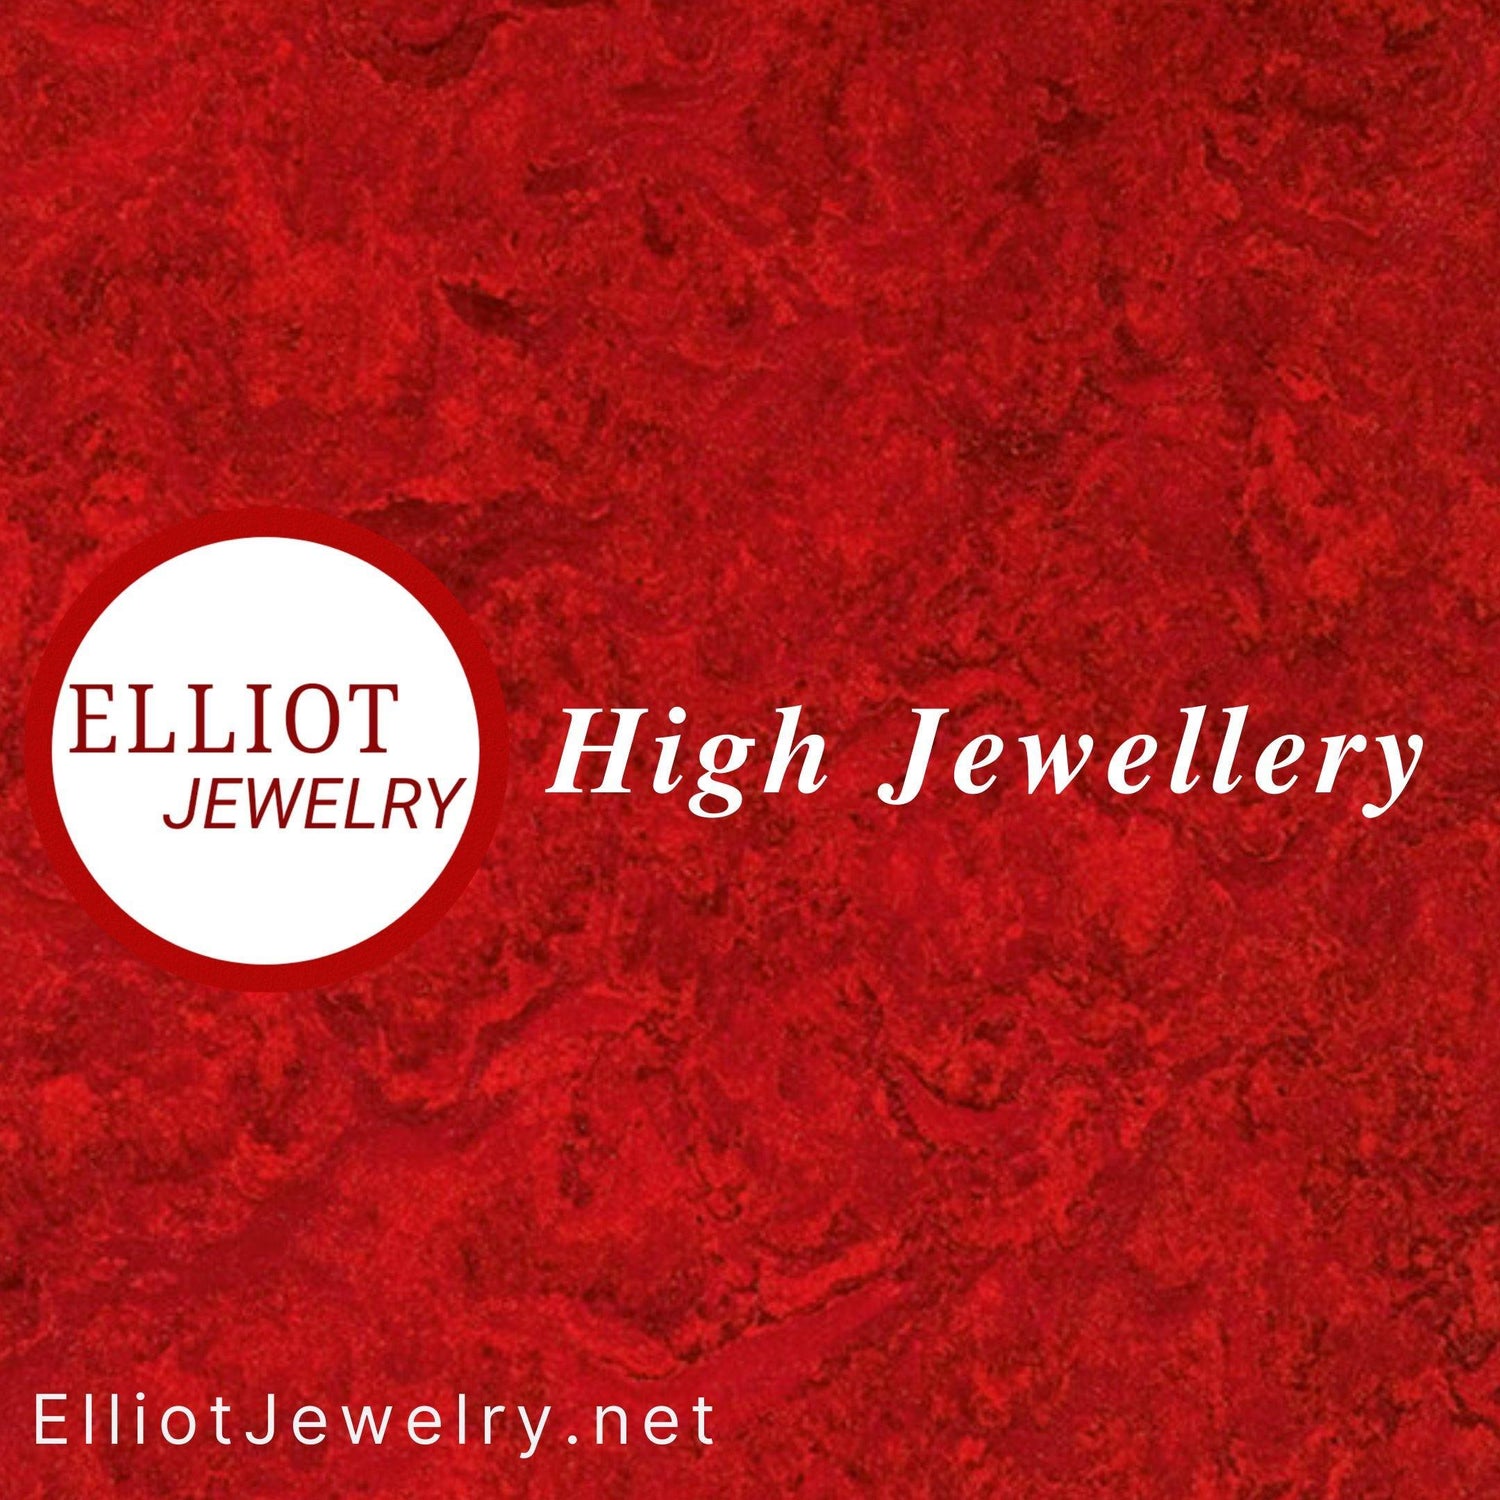 High Jewellery | Elliot Jewelry